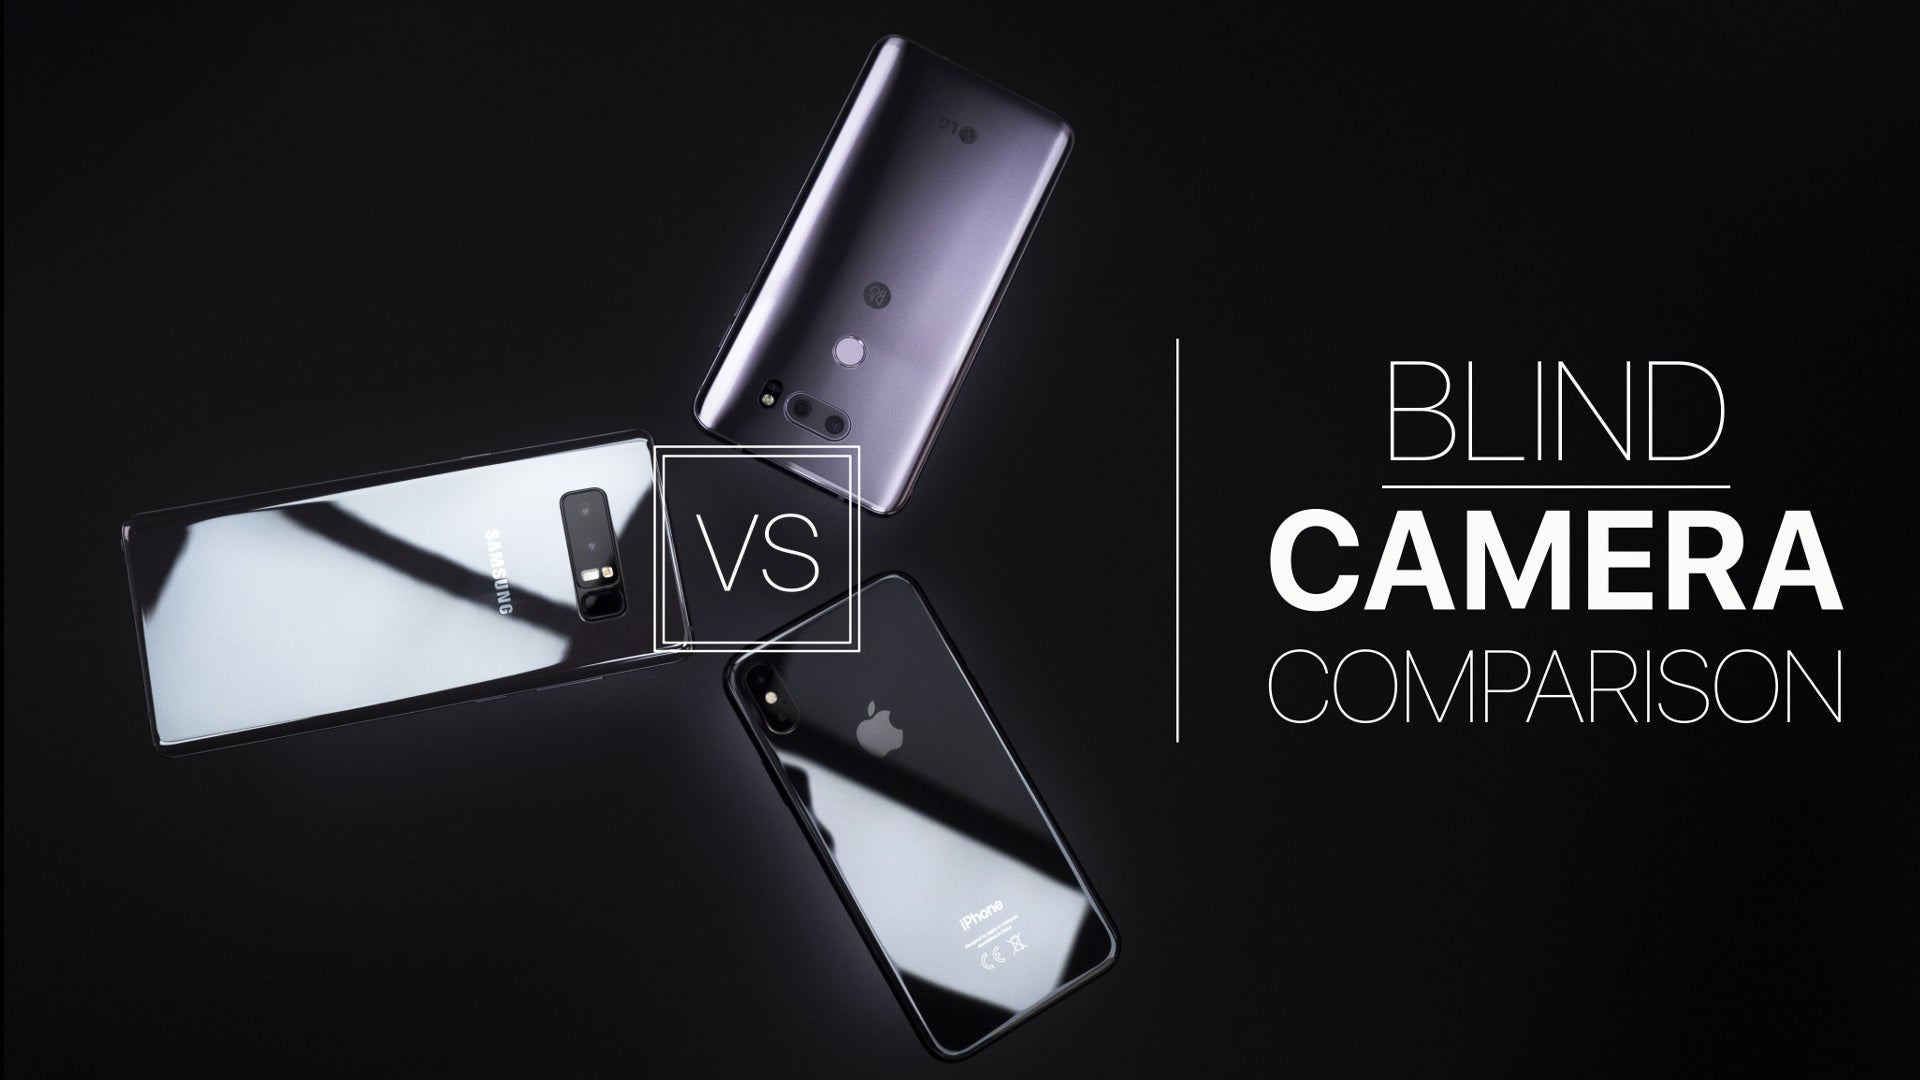 Blind camera comparison results: iPhone X vs Galaxy Note 8 vs LG V30